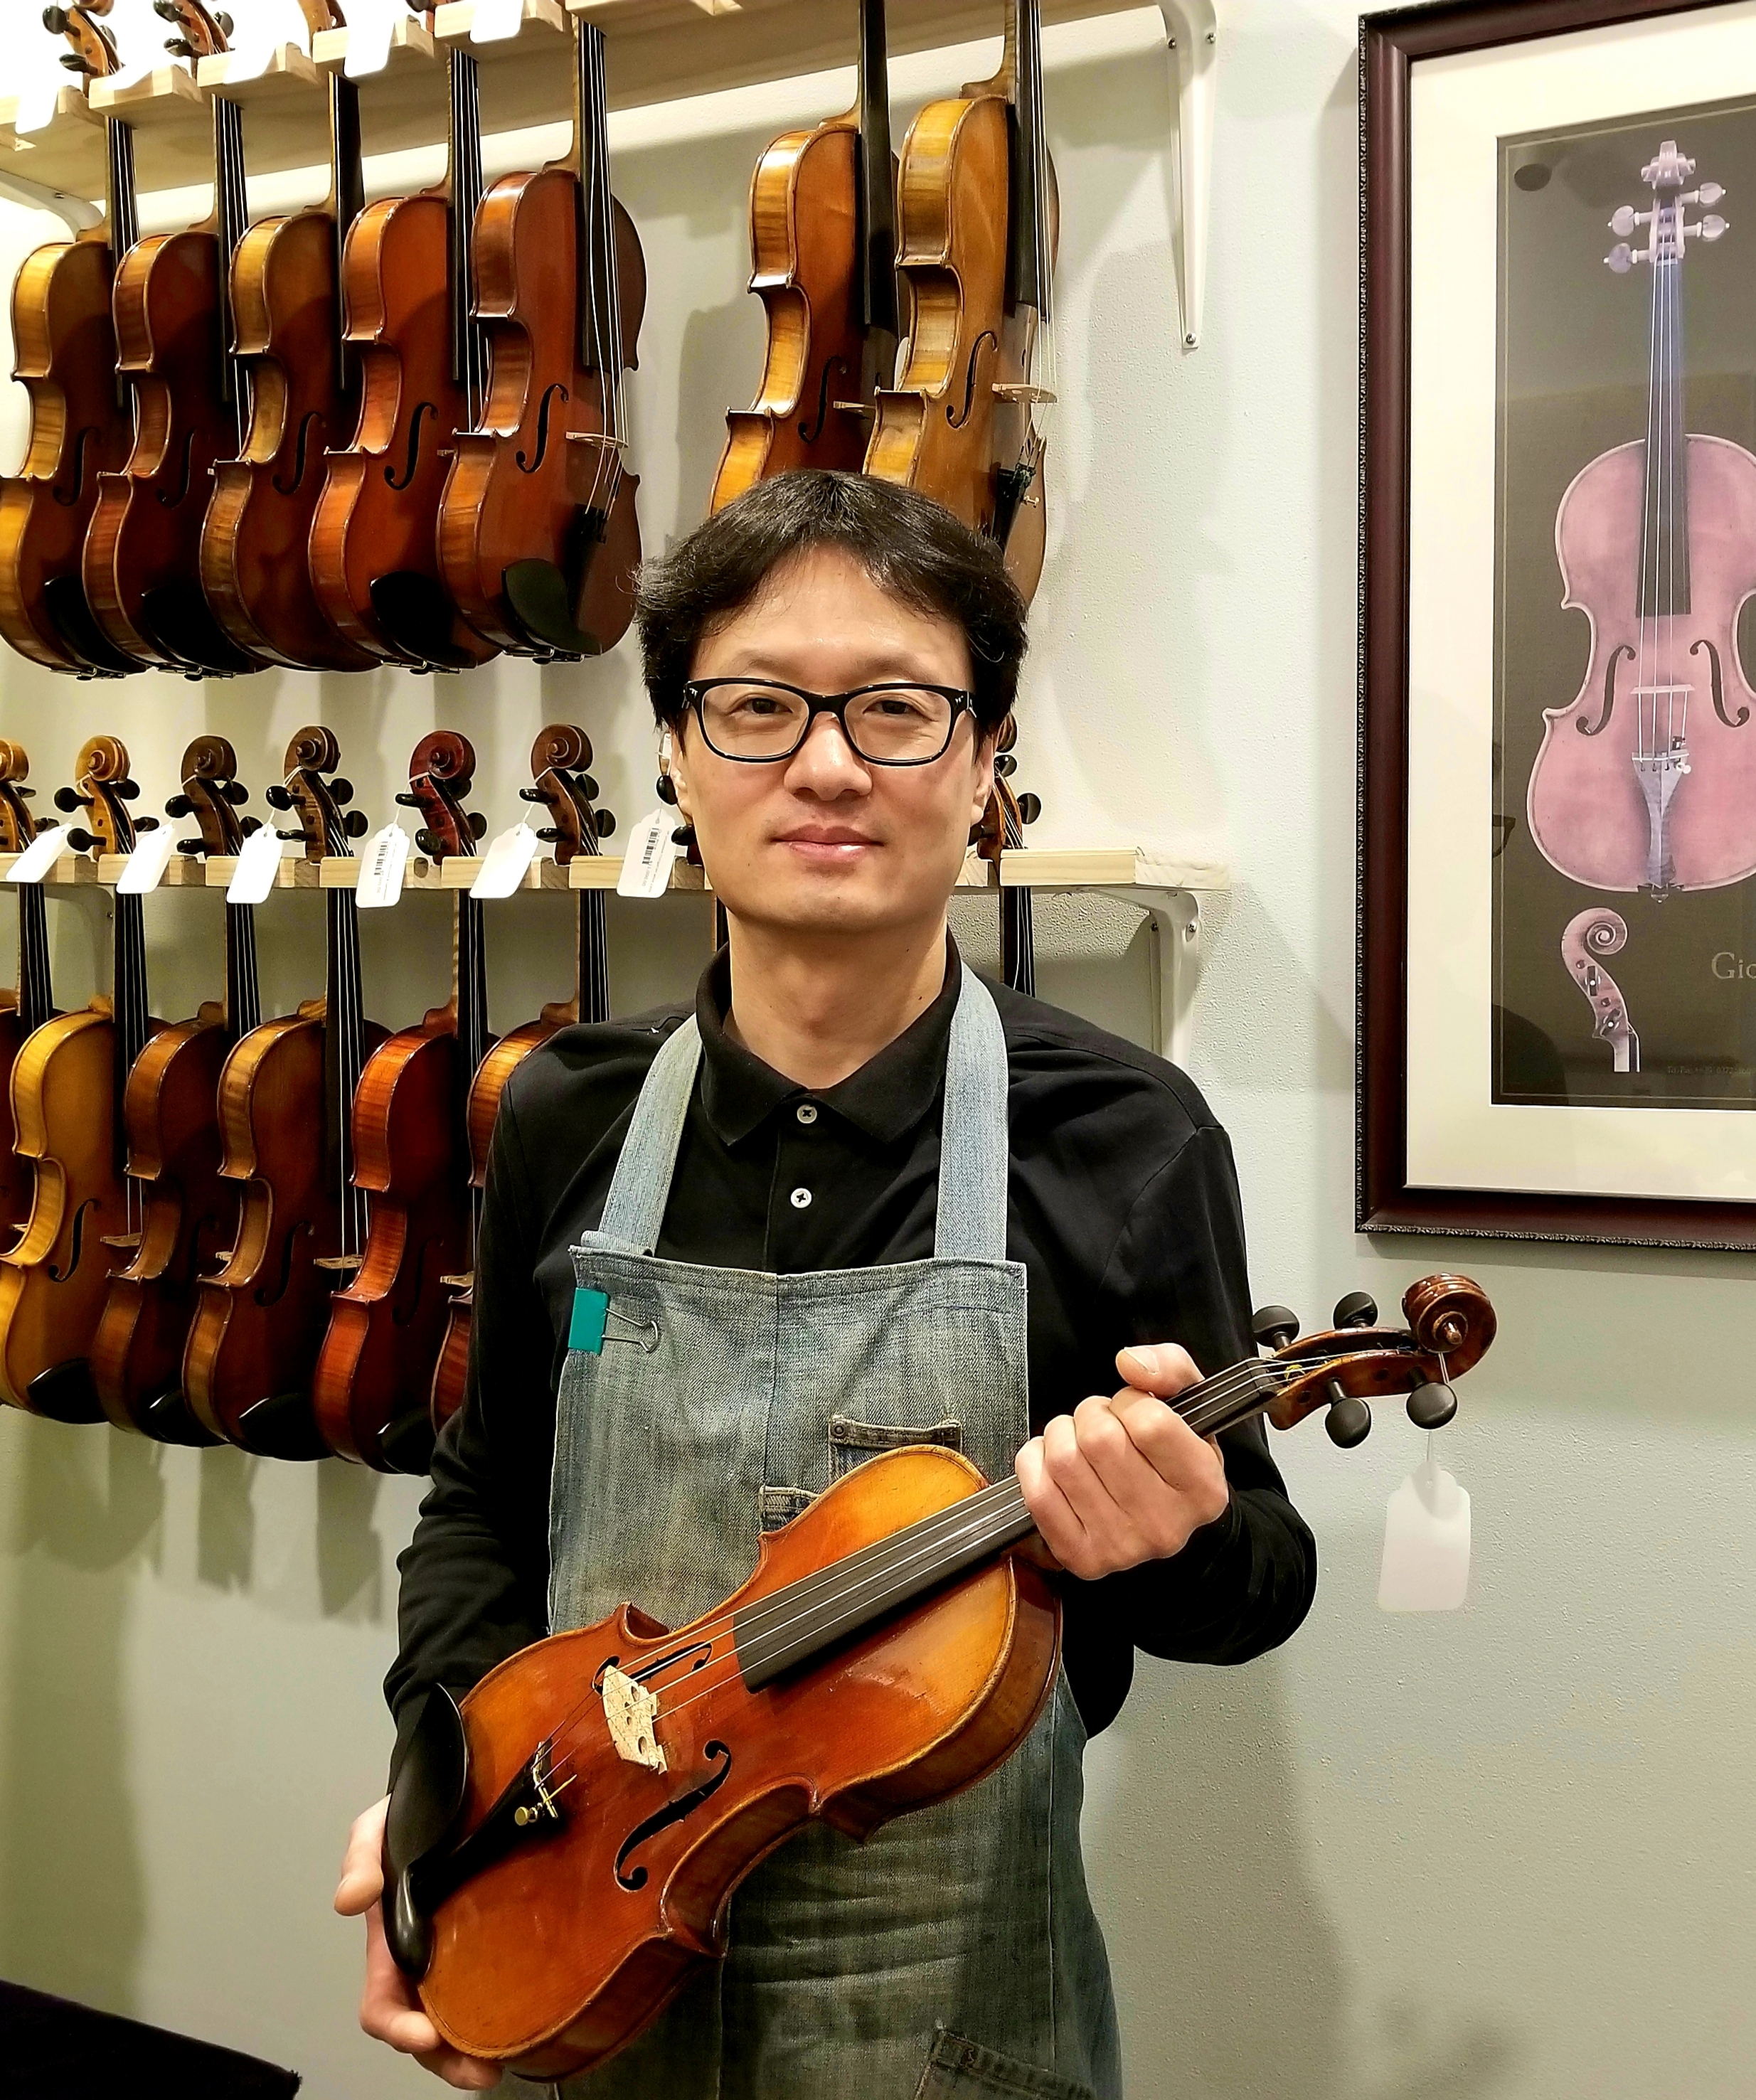 About Us - Fairfax Violins